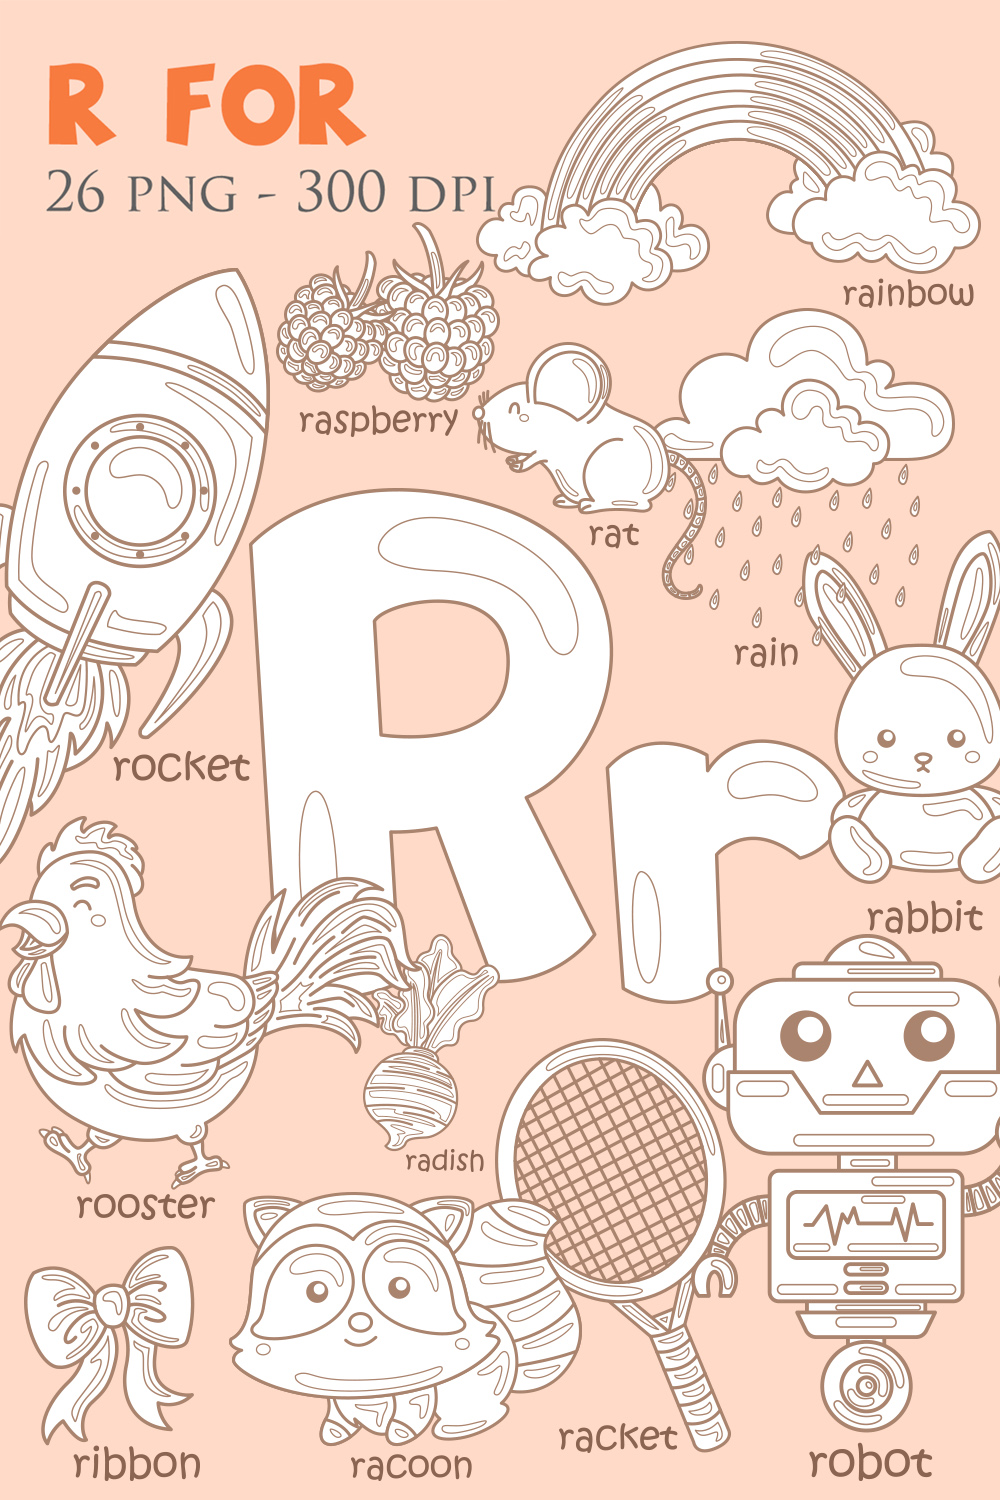 Alphabet R For Vocabulary School Lesson Rocket Robot Rat Rabbit Radish Ribbon Racoon Racket Rainbow Raspberry Rain Rooster Cartoon Digital Stamp Outline Black and White pinterest preview image.